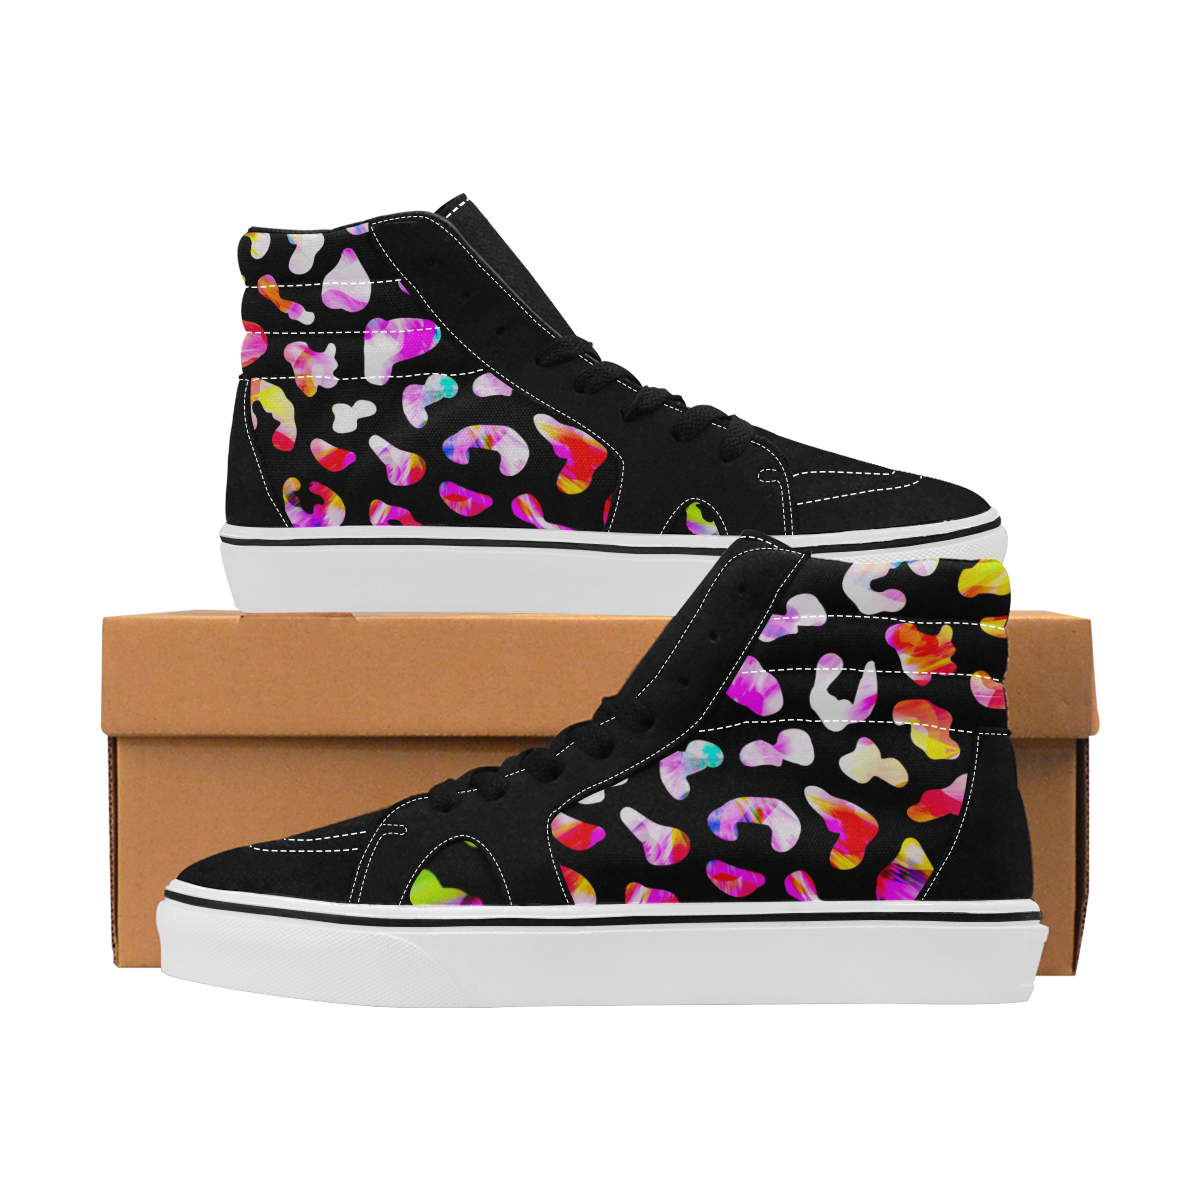 colorful animal print Women's High Top Skateboarding Shoes/Large (Model E001-1)